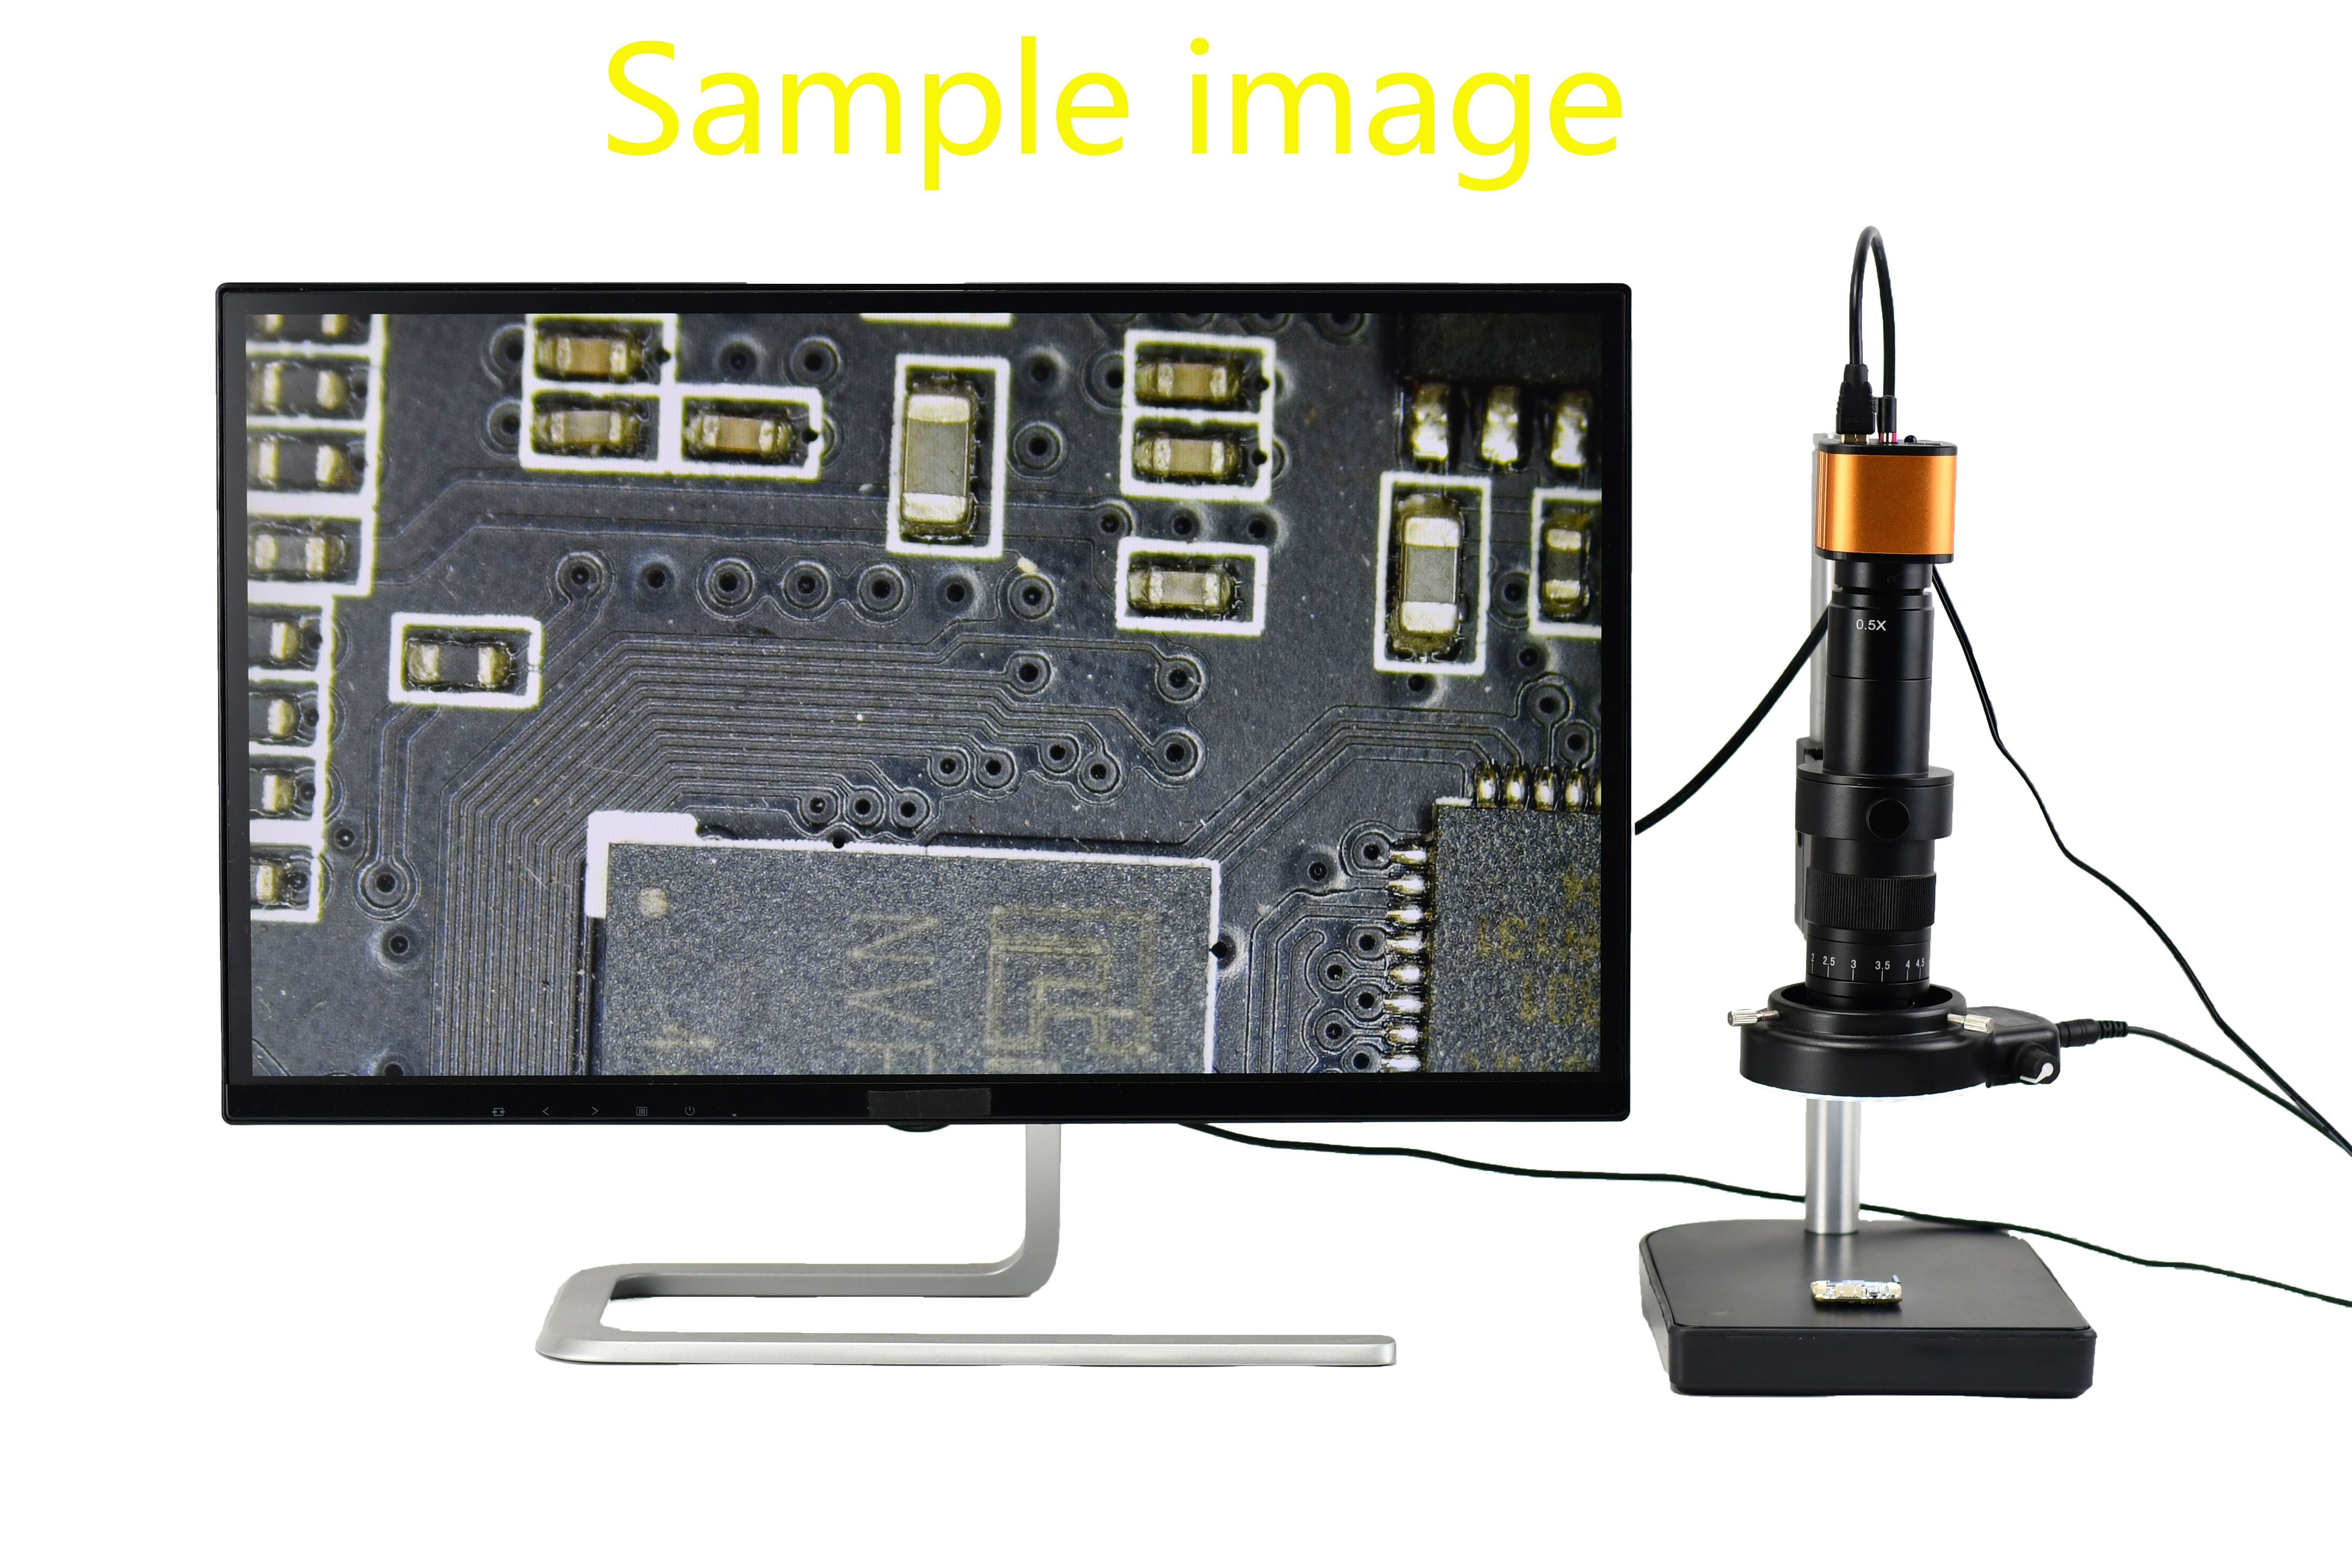 HAYEAR-MINI-Microscope-16MP-130X-45X-Zoom-USB-Industrial-Electronic-Digital-Video-Soldering-Microsco-1592540